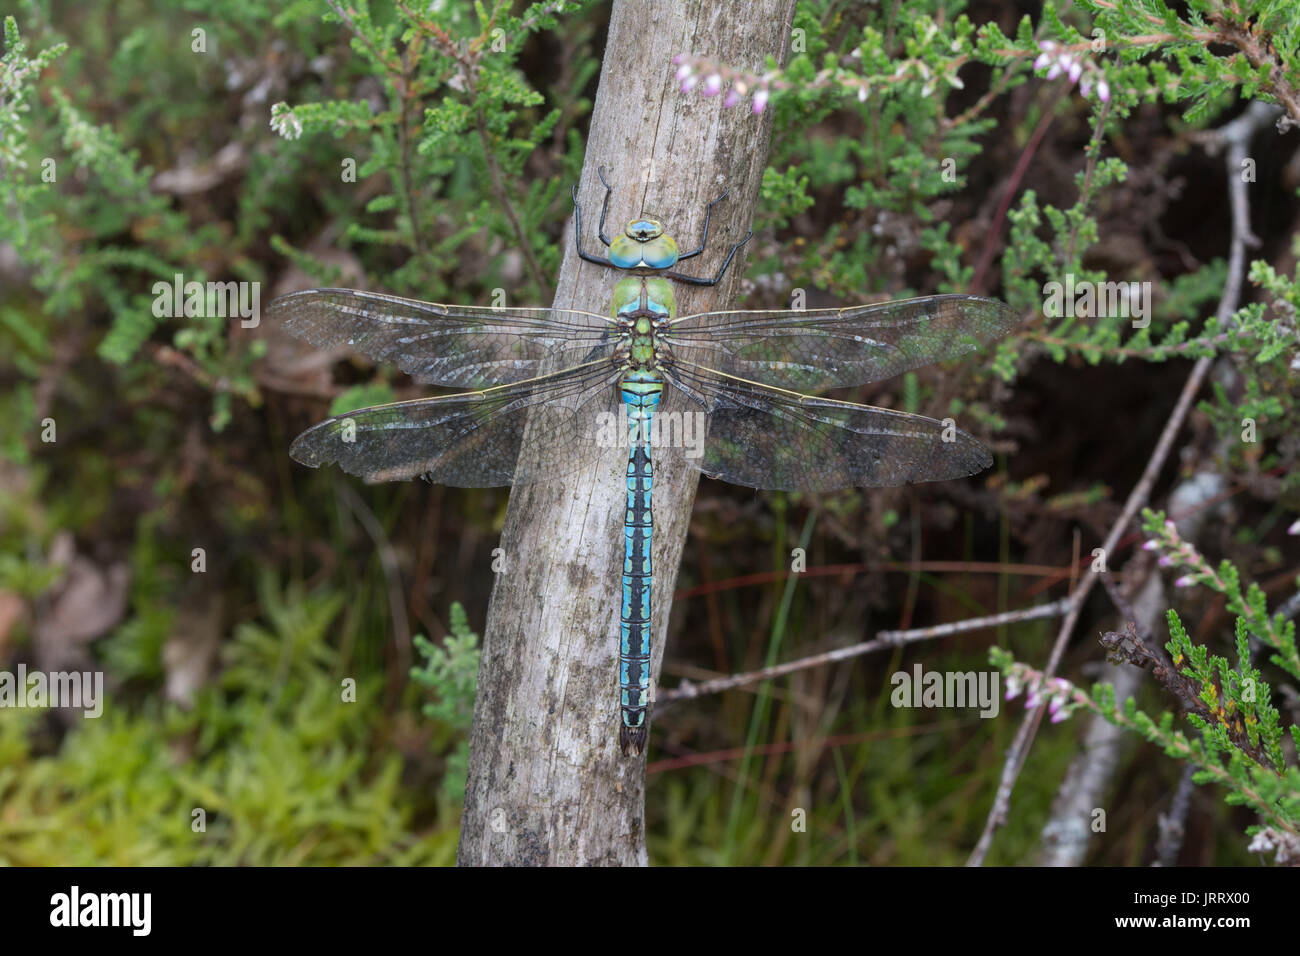 Close-up of emperor dragonfly (Anax imperator) in heathland habitat Stock Photo